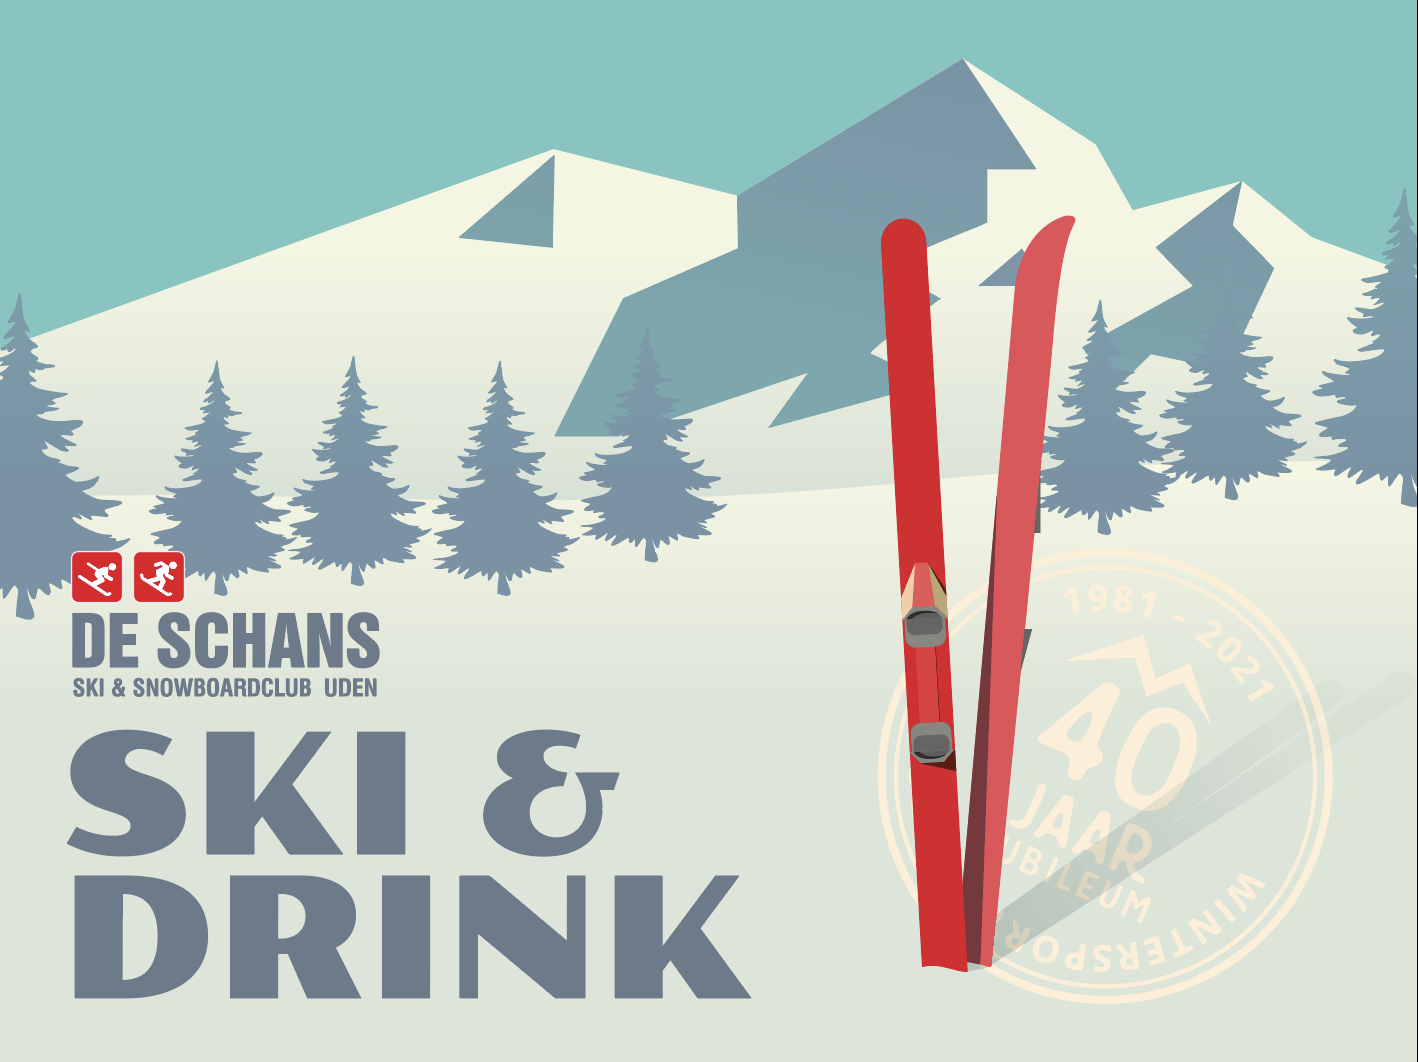 Ski en Drink